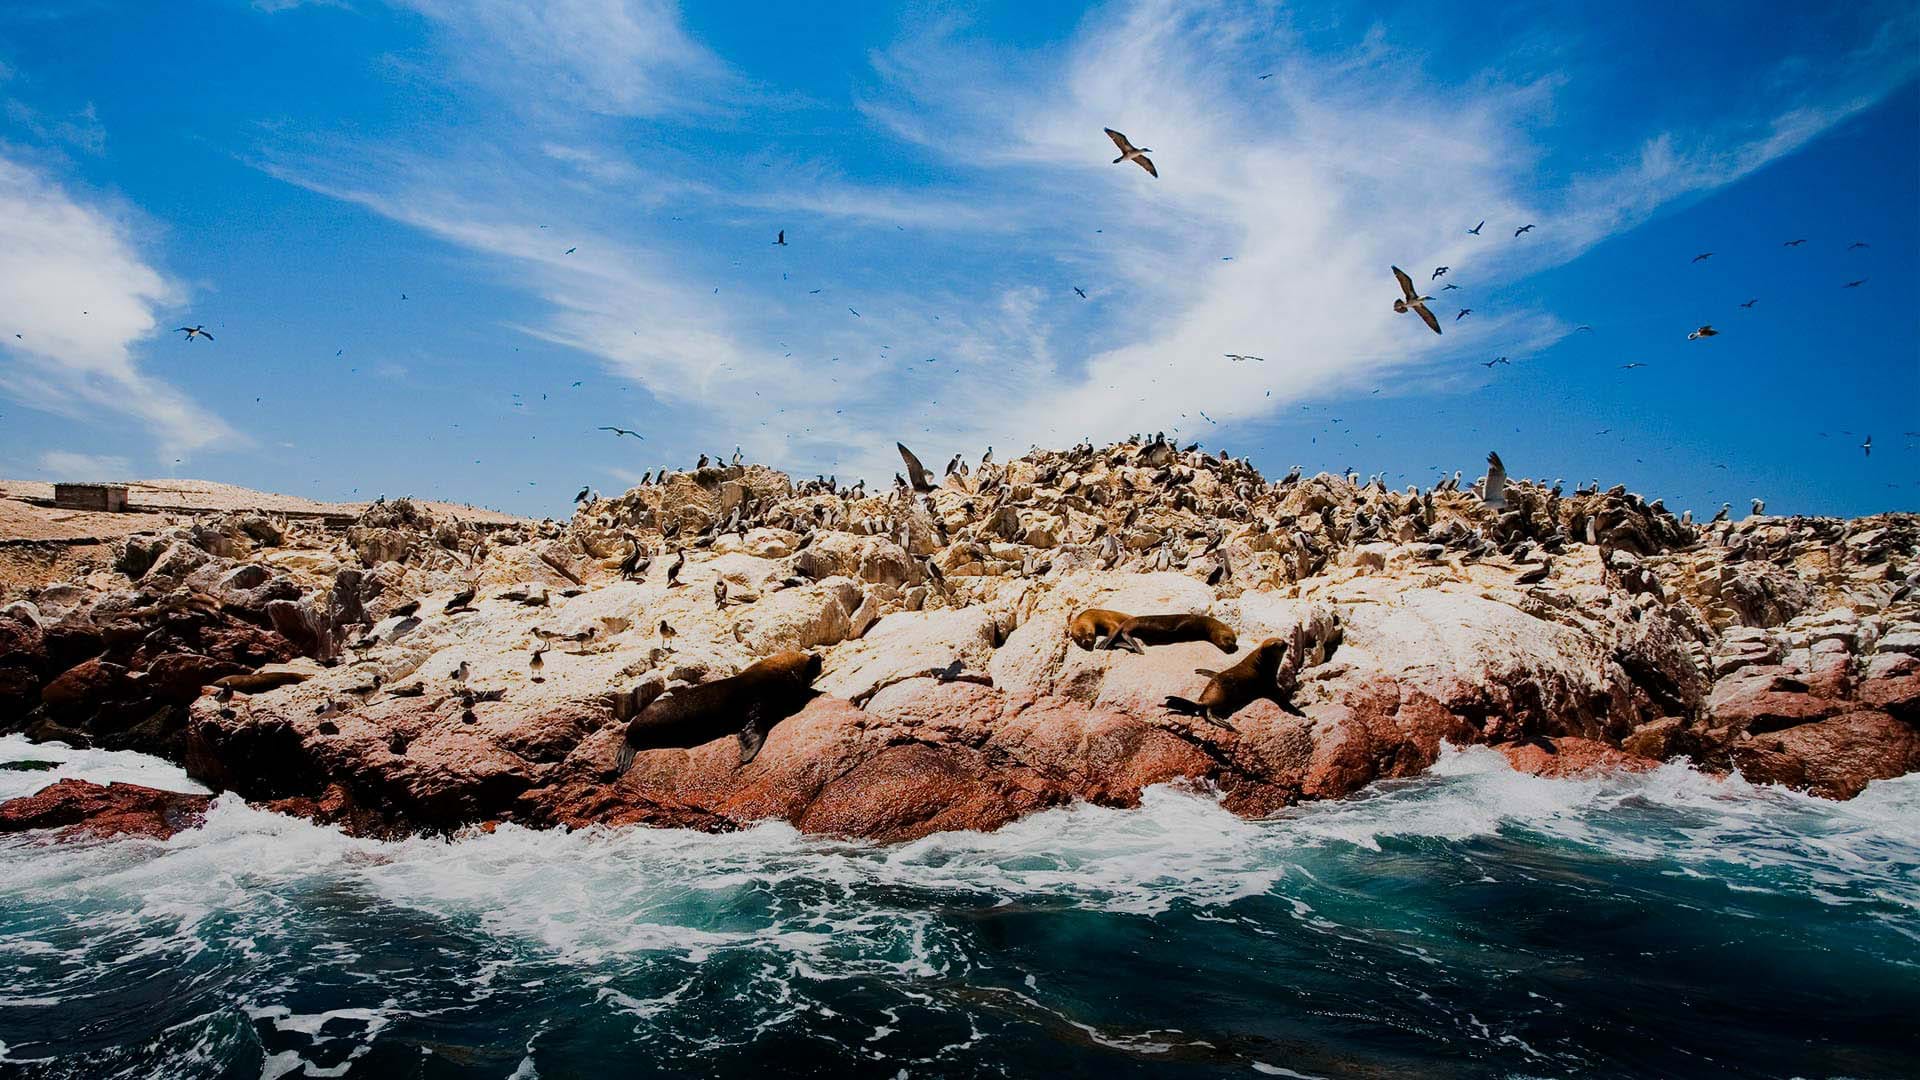 Sea lions at the Ballestas Islands